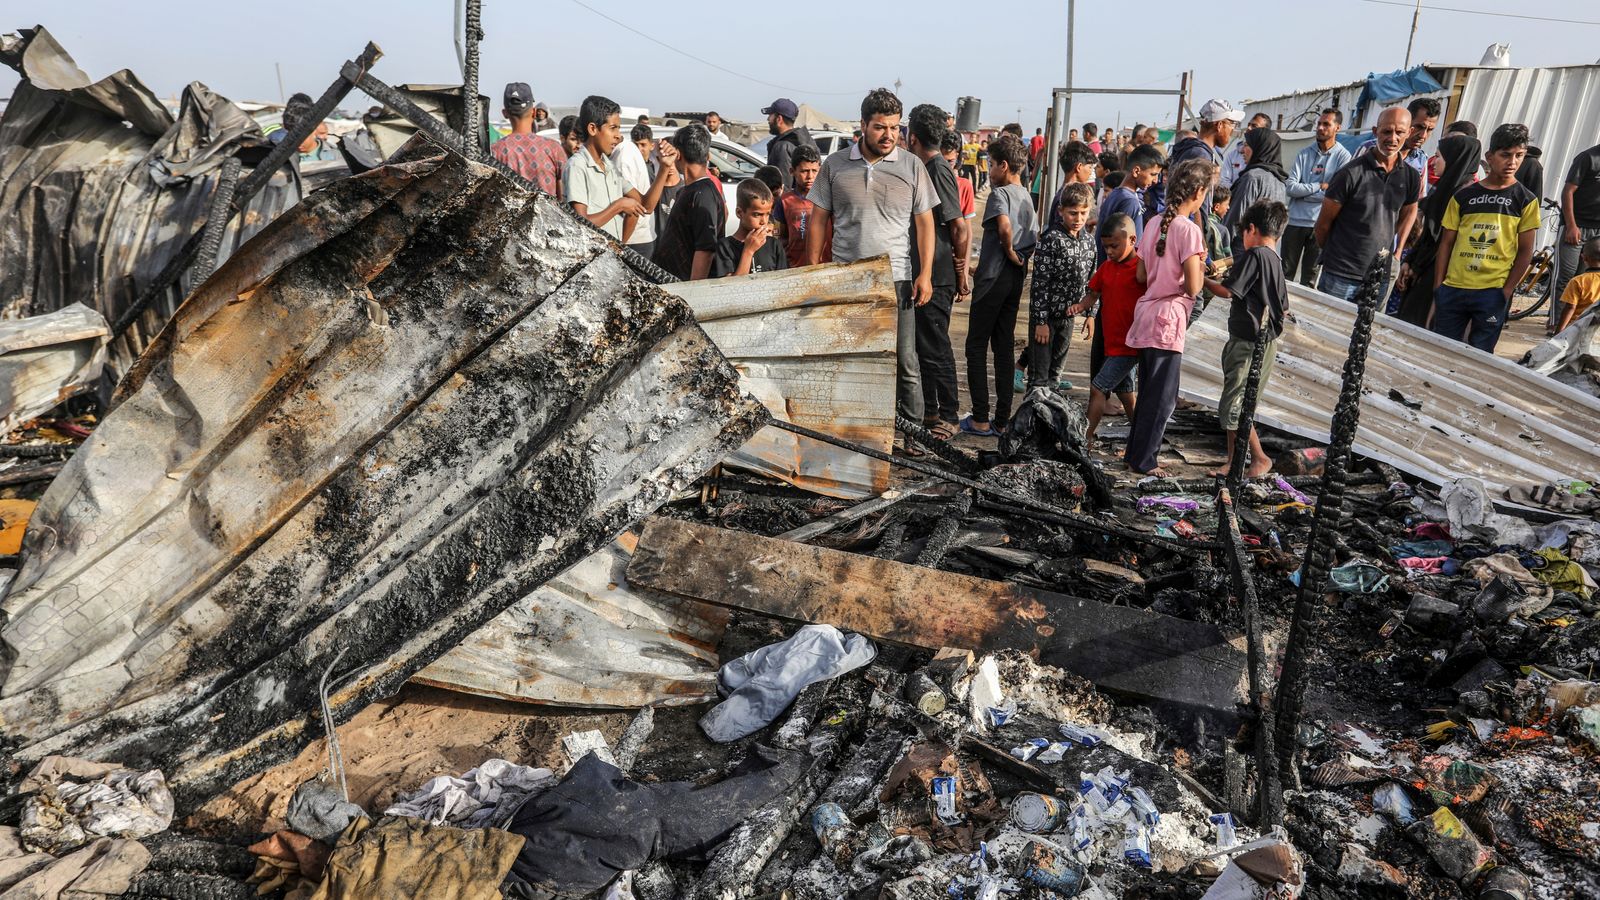 Rafah is 'hell on Earth', warns UN agency head, as Netanyahu claims airstrike was a 'tragic mistake'